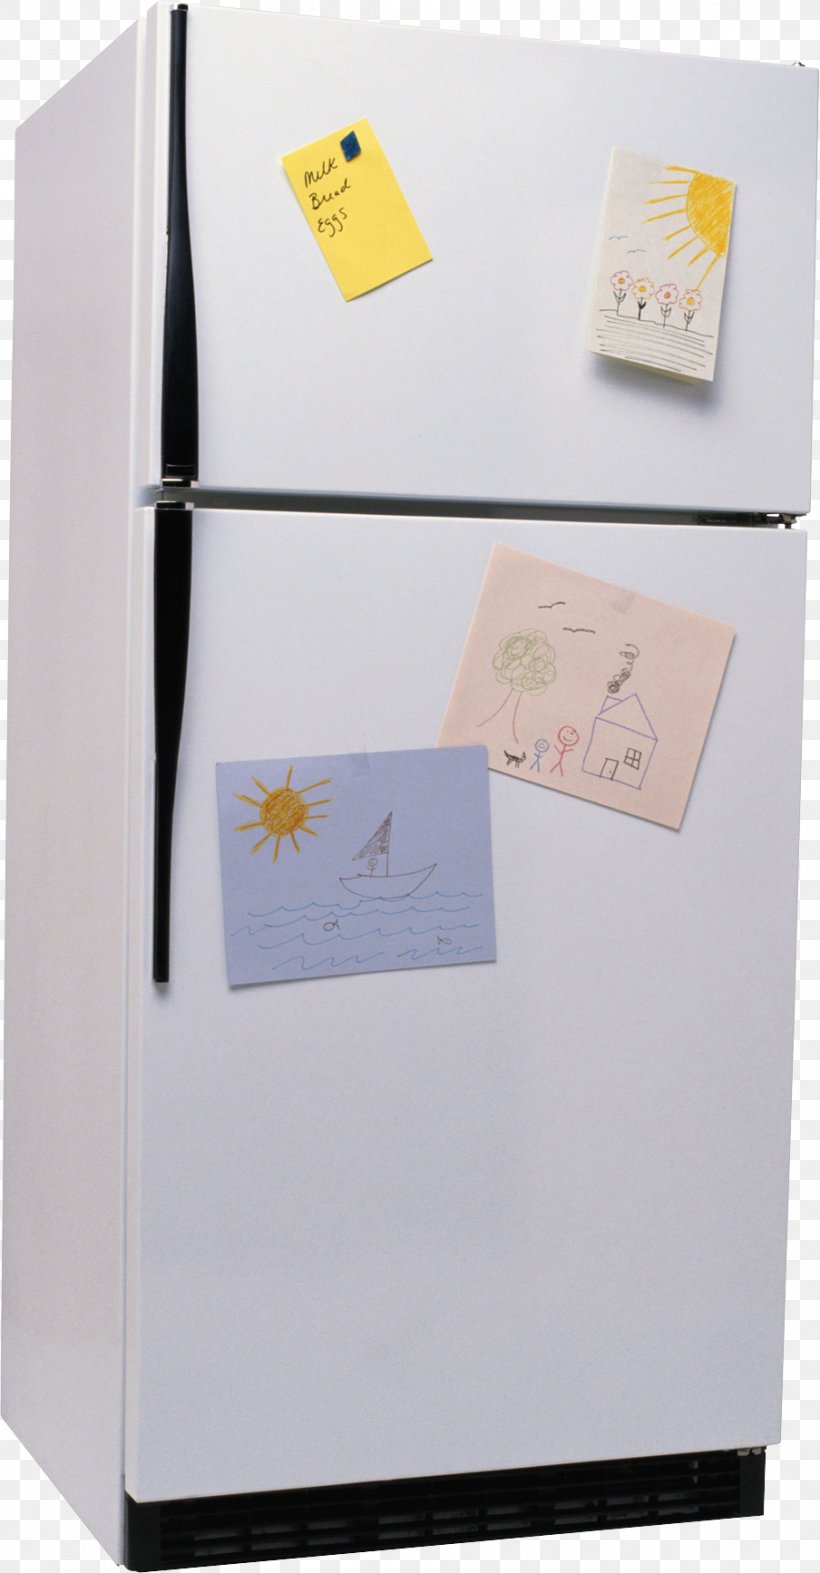 Refrigerator Home Appliance Kitchen Clip Art, PNG, 904x1735px, Refrigerator, Home Appliance, Image File Formats, Kitchen, Photography Download Free